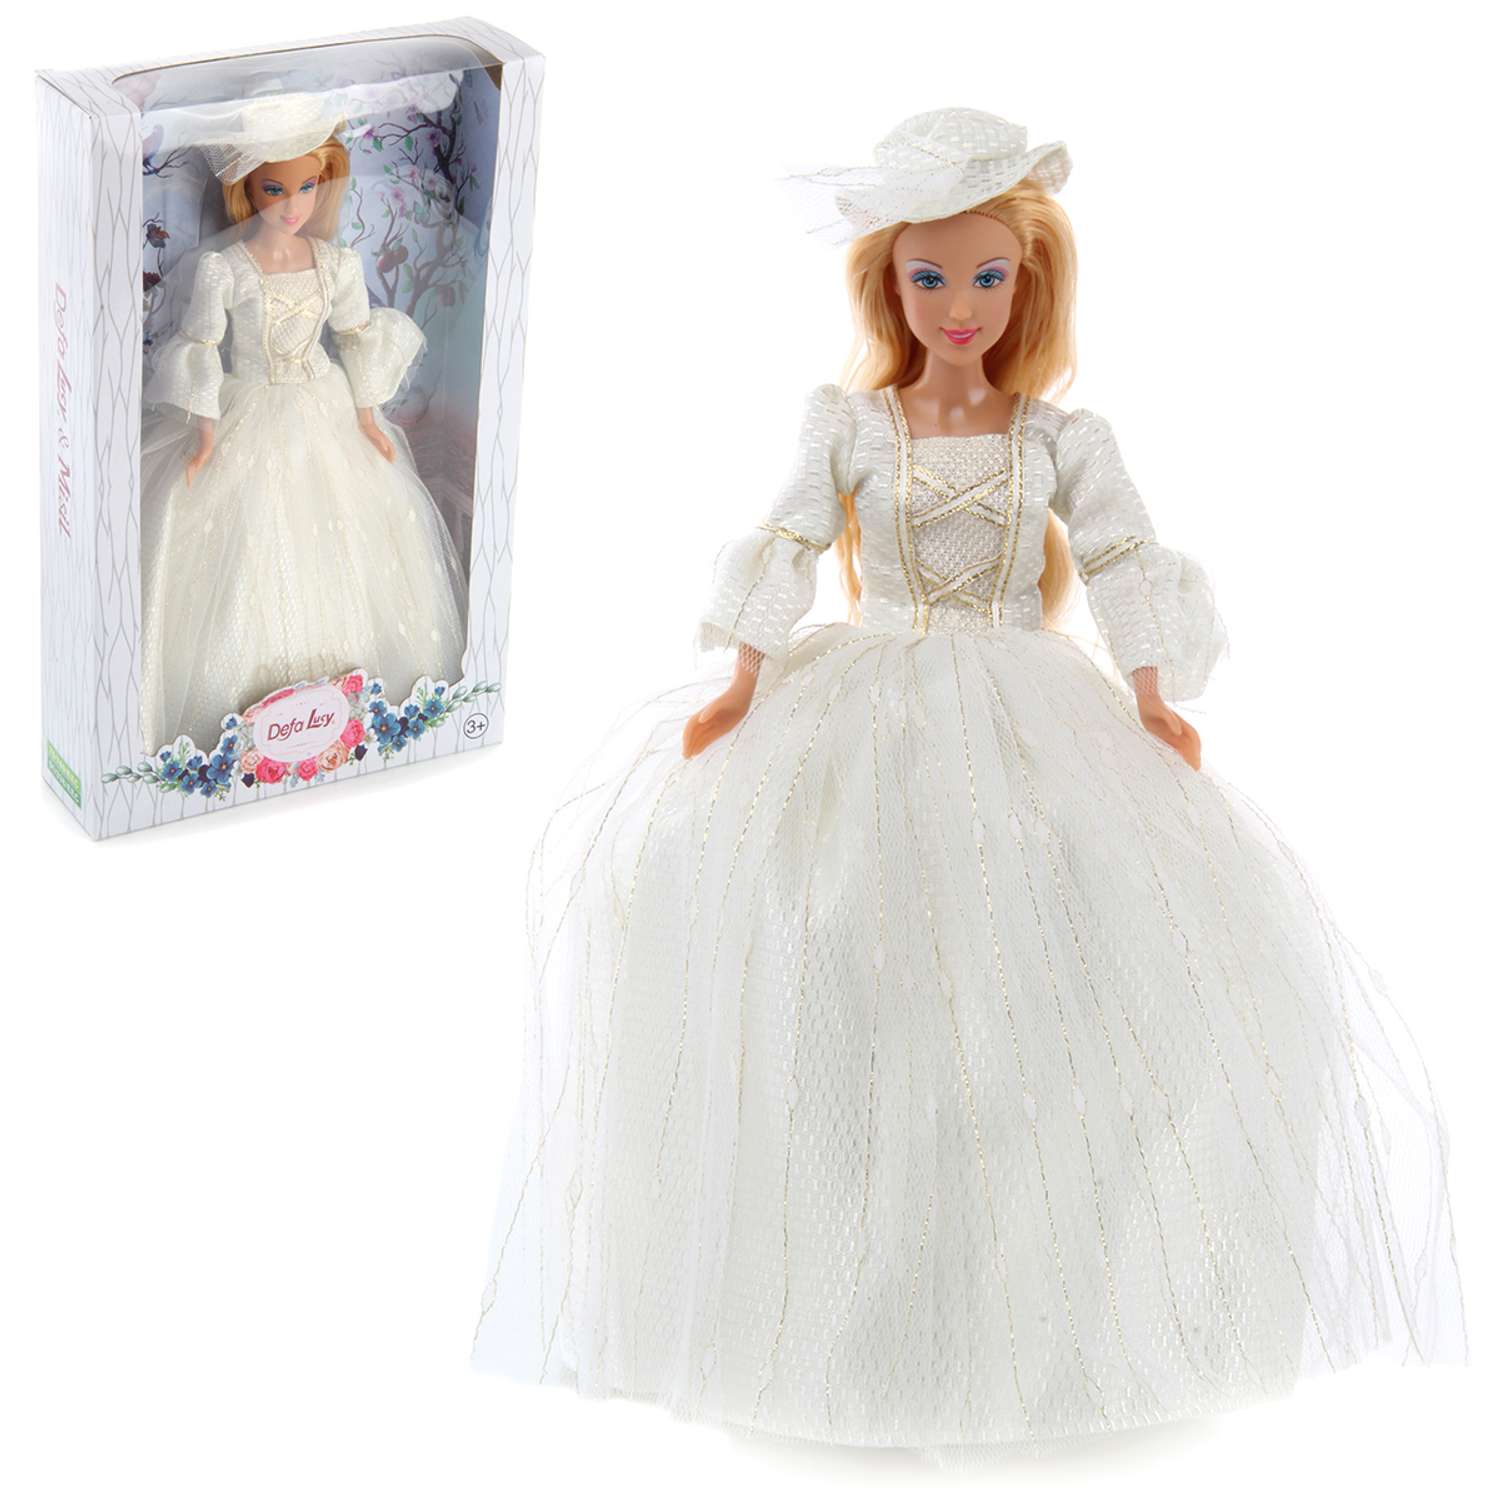 Кукла модель Барби Veld Co в свадебном платье 125522 - фото 2